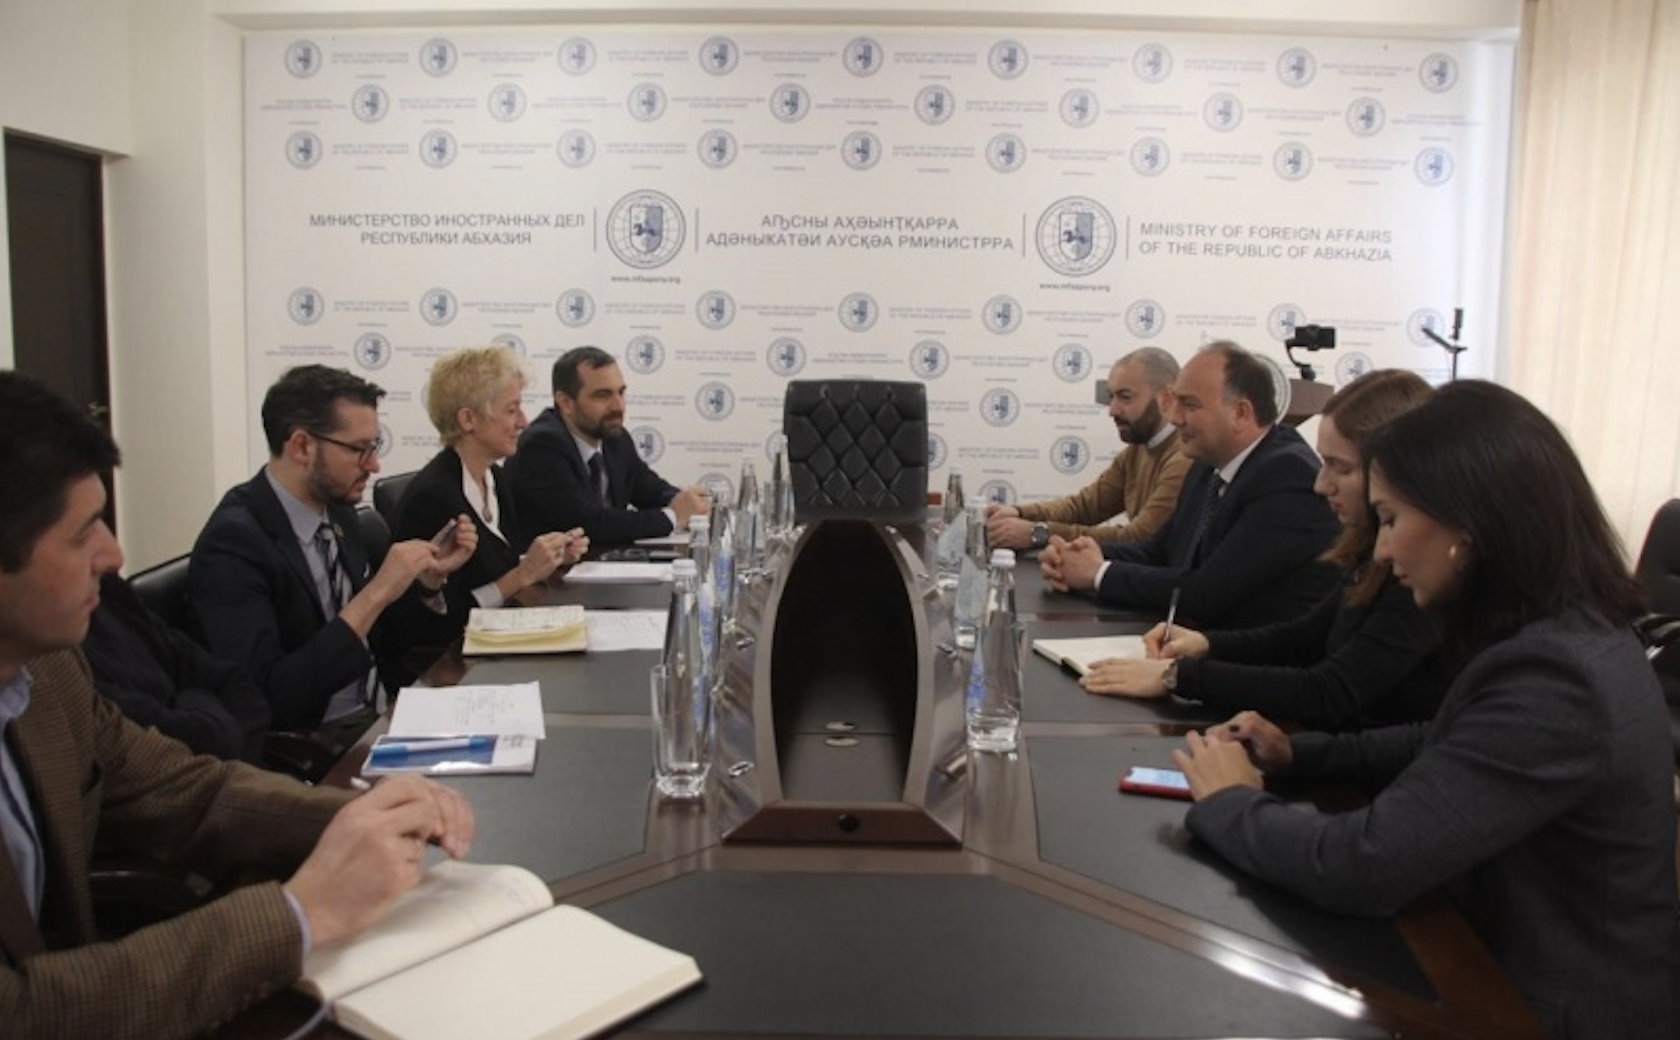 Daur Kove met with the representatives of the World Health Organization